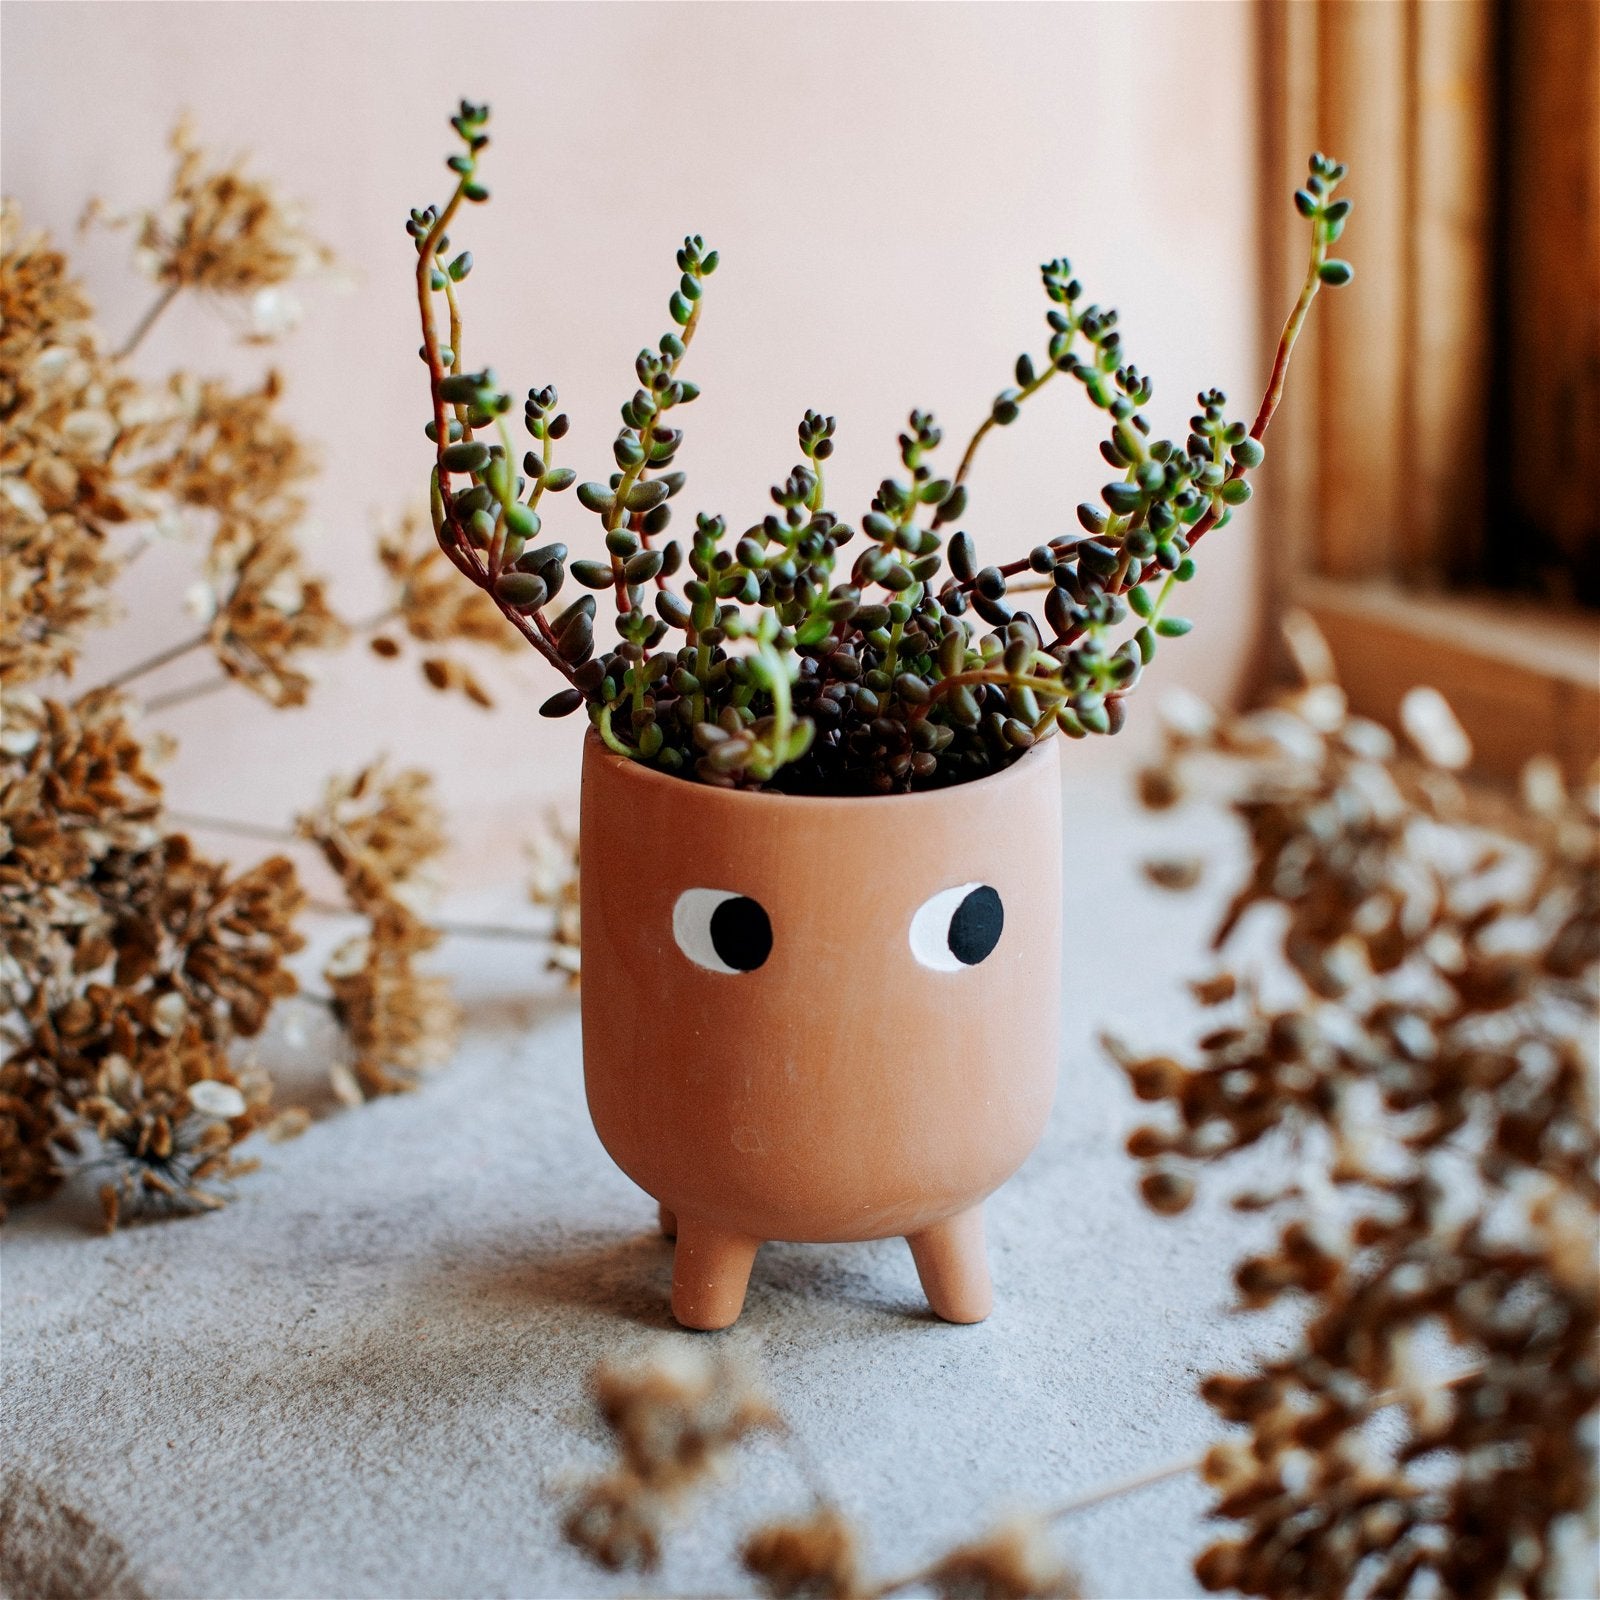 Little Leggy Terracotta Planter - a Cheeky Plant